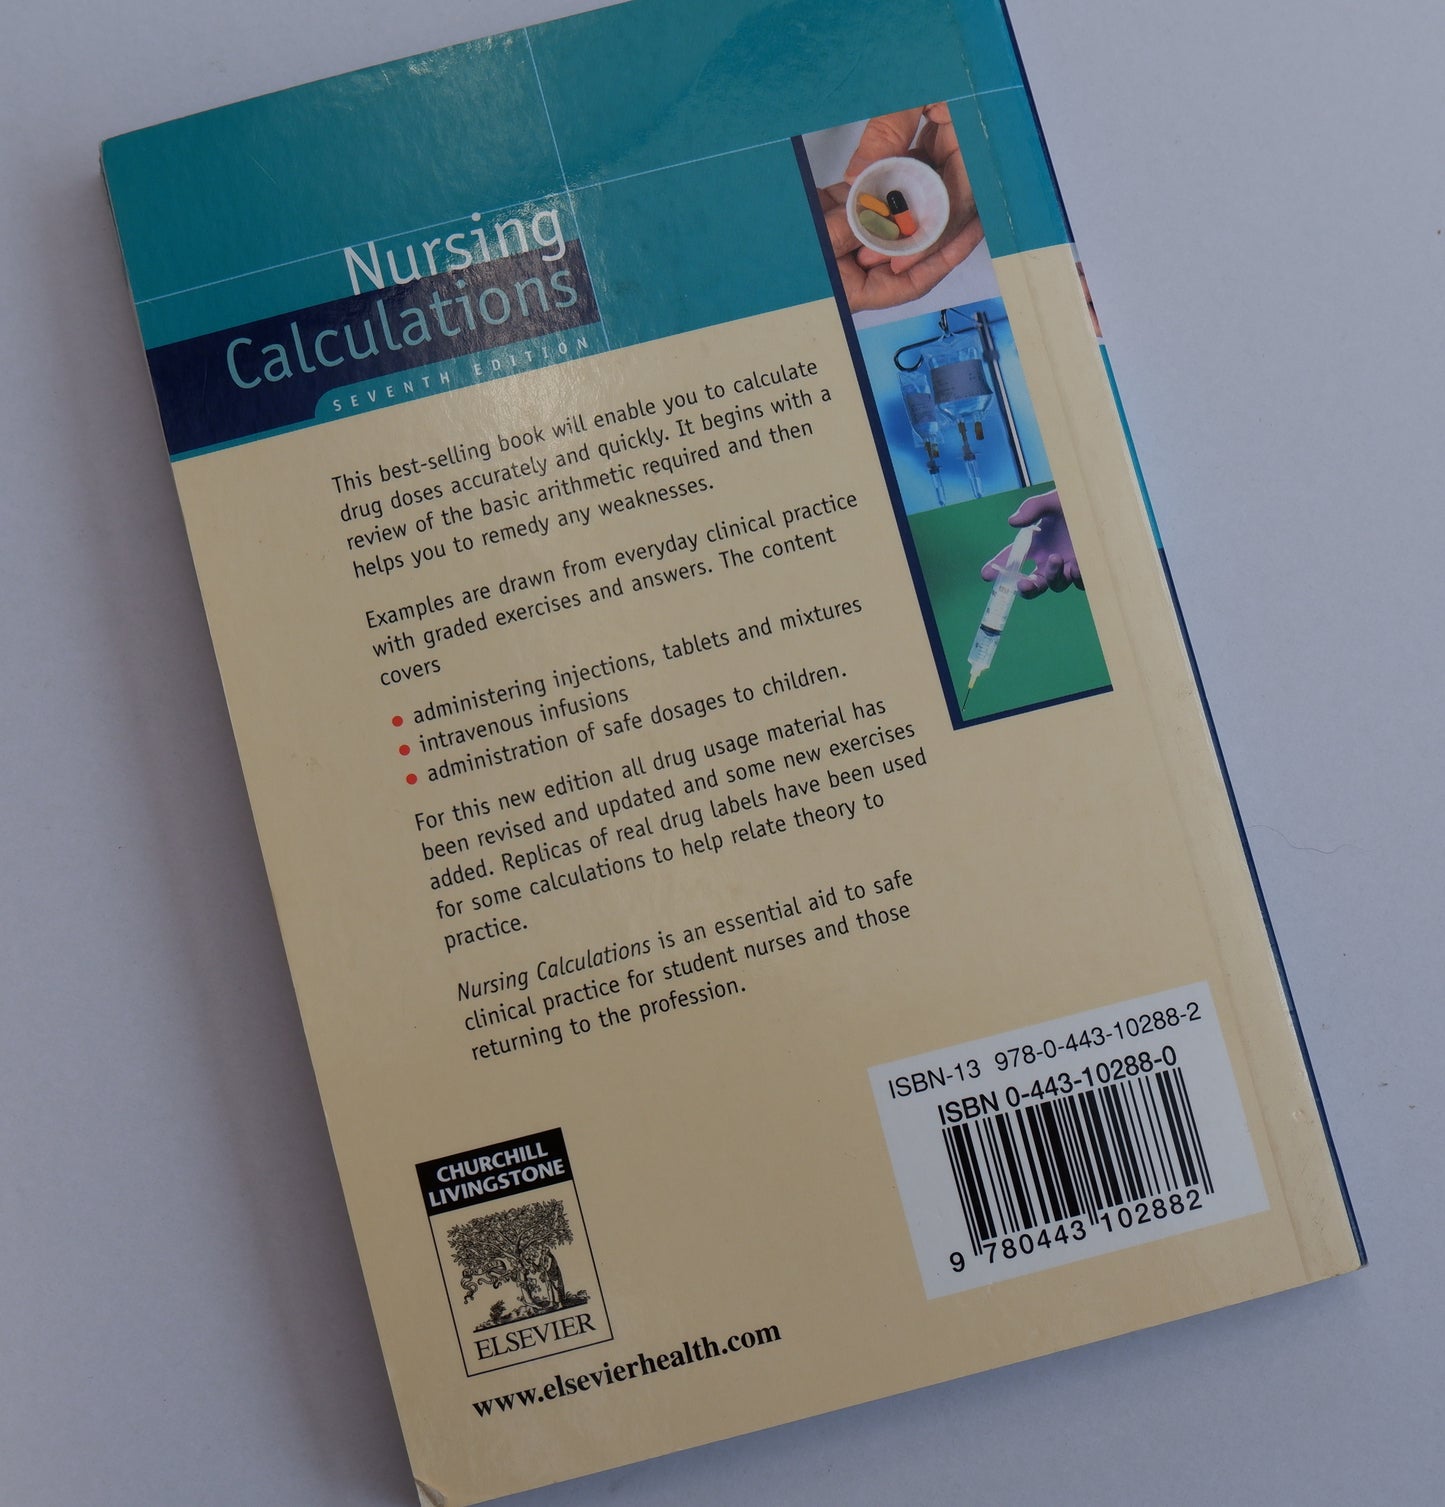 Nursing Calculations - J.D Gatford